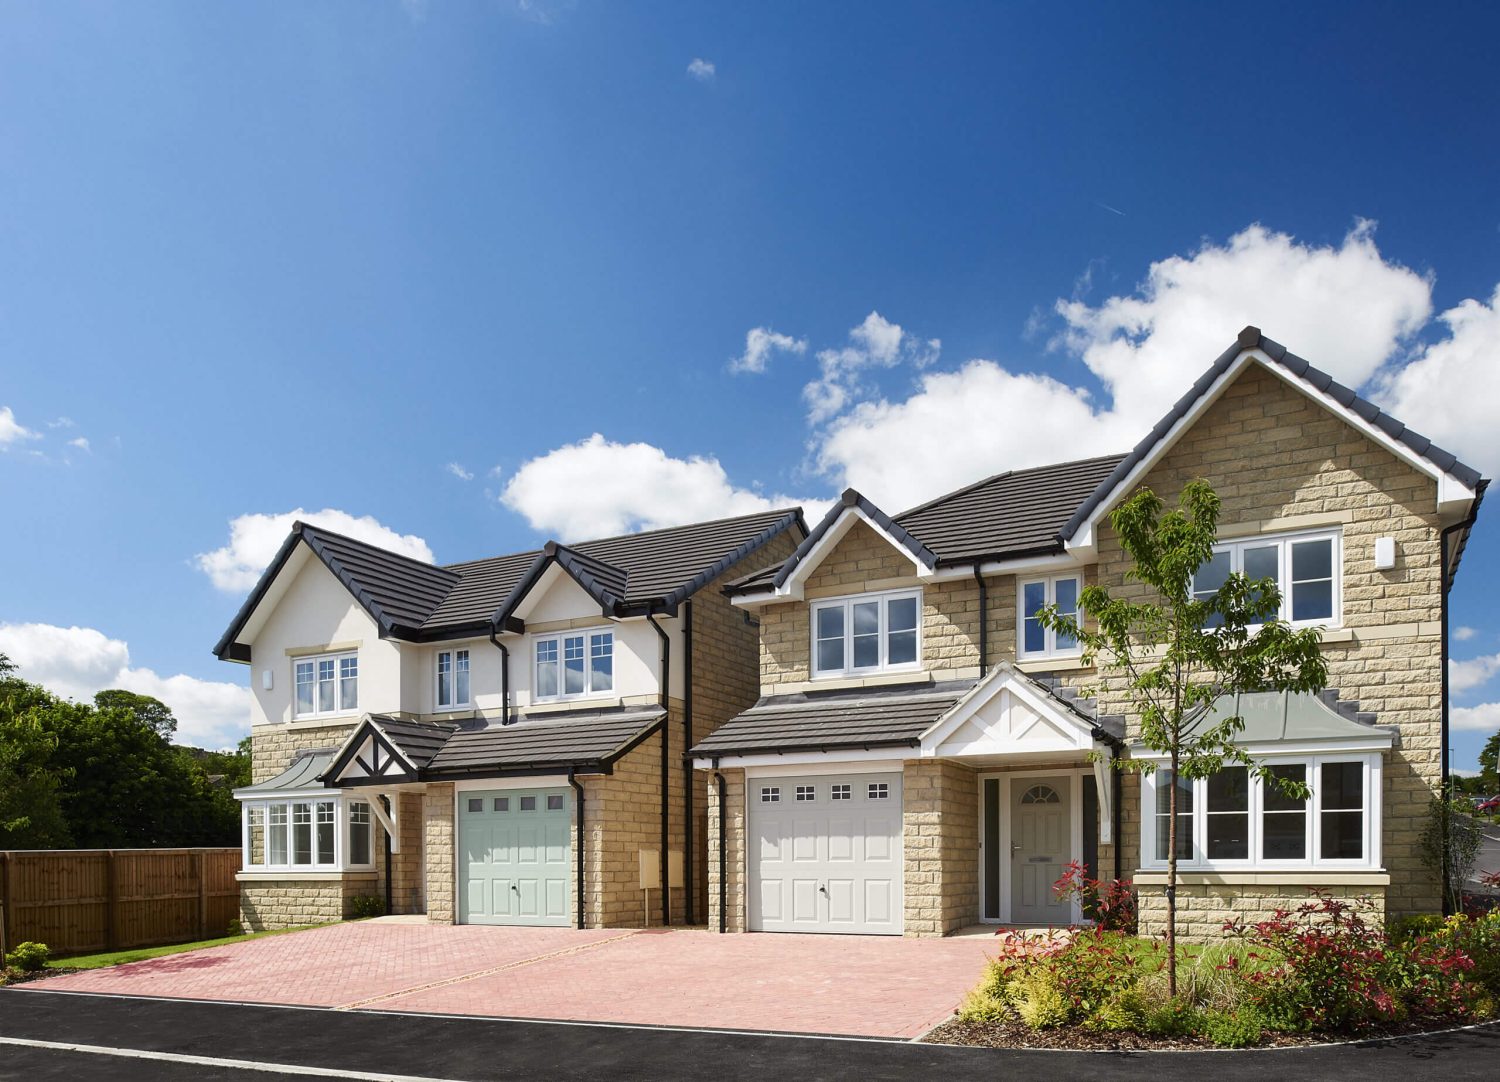 Jones Homes named as builder behind best small development in West Yorkshire